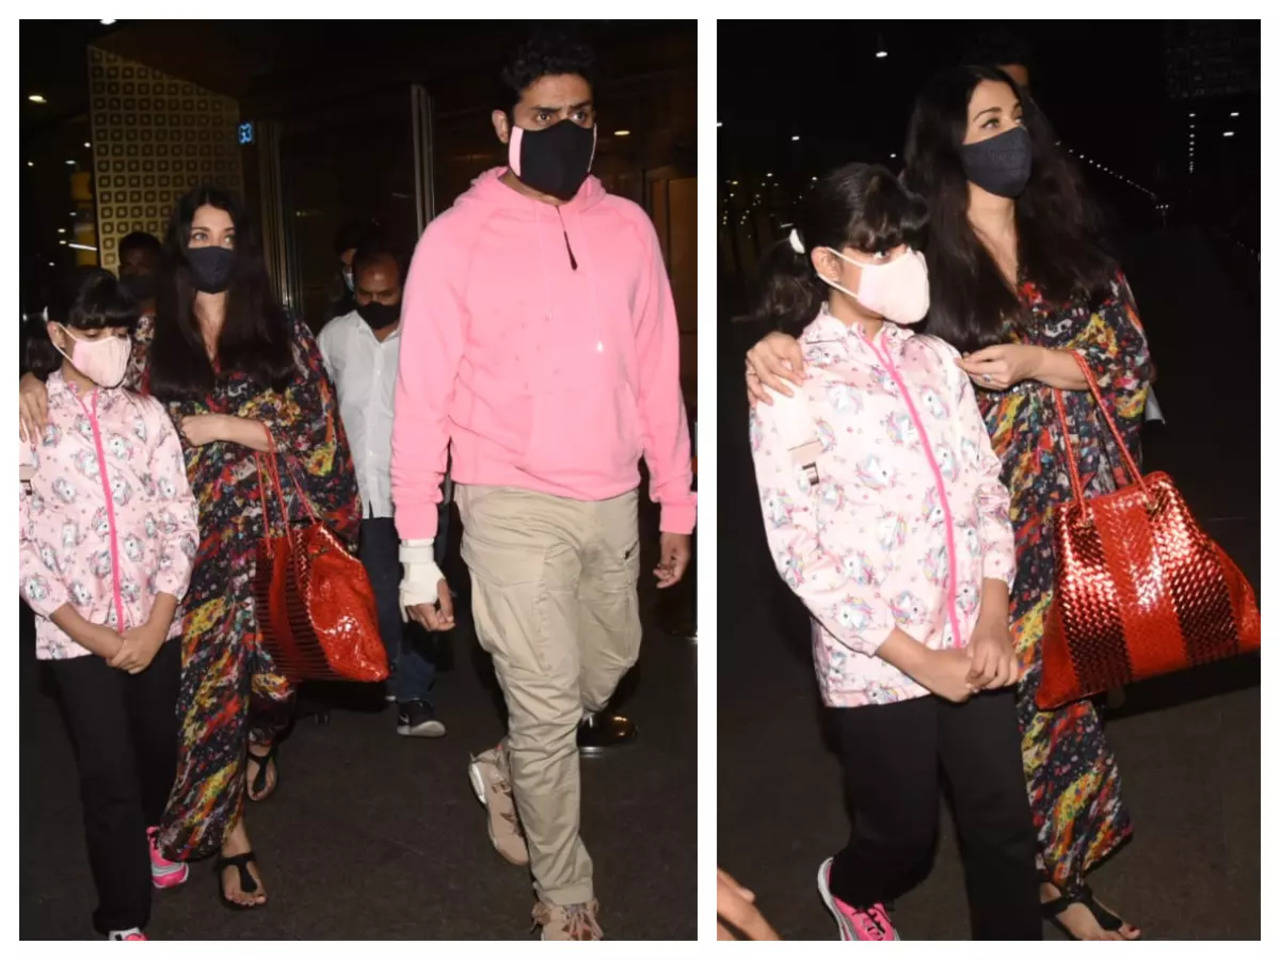 Love Aishwarya Rai Bachchan and Shilpa Shetty's airport style? You